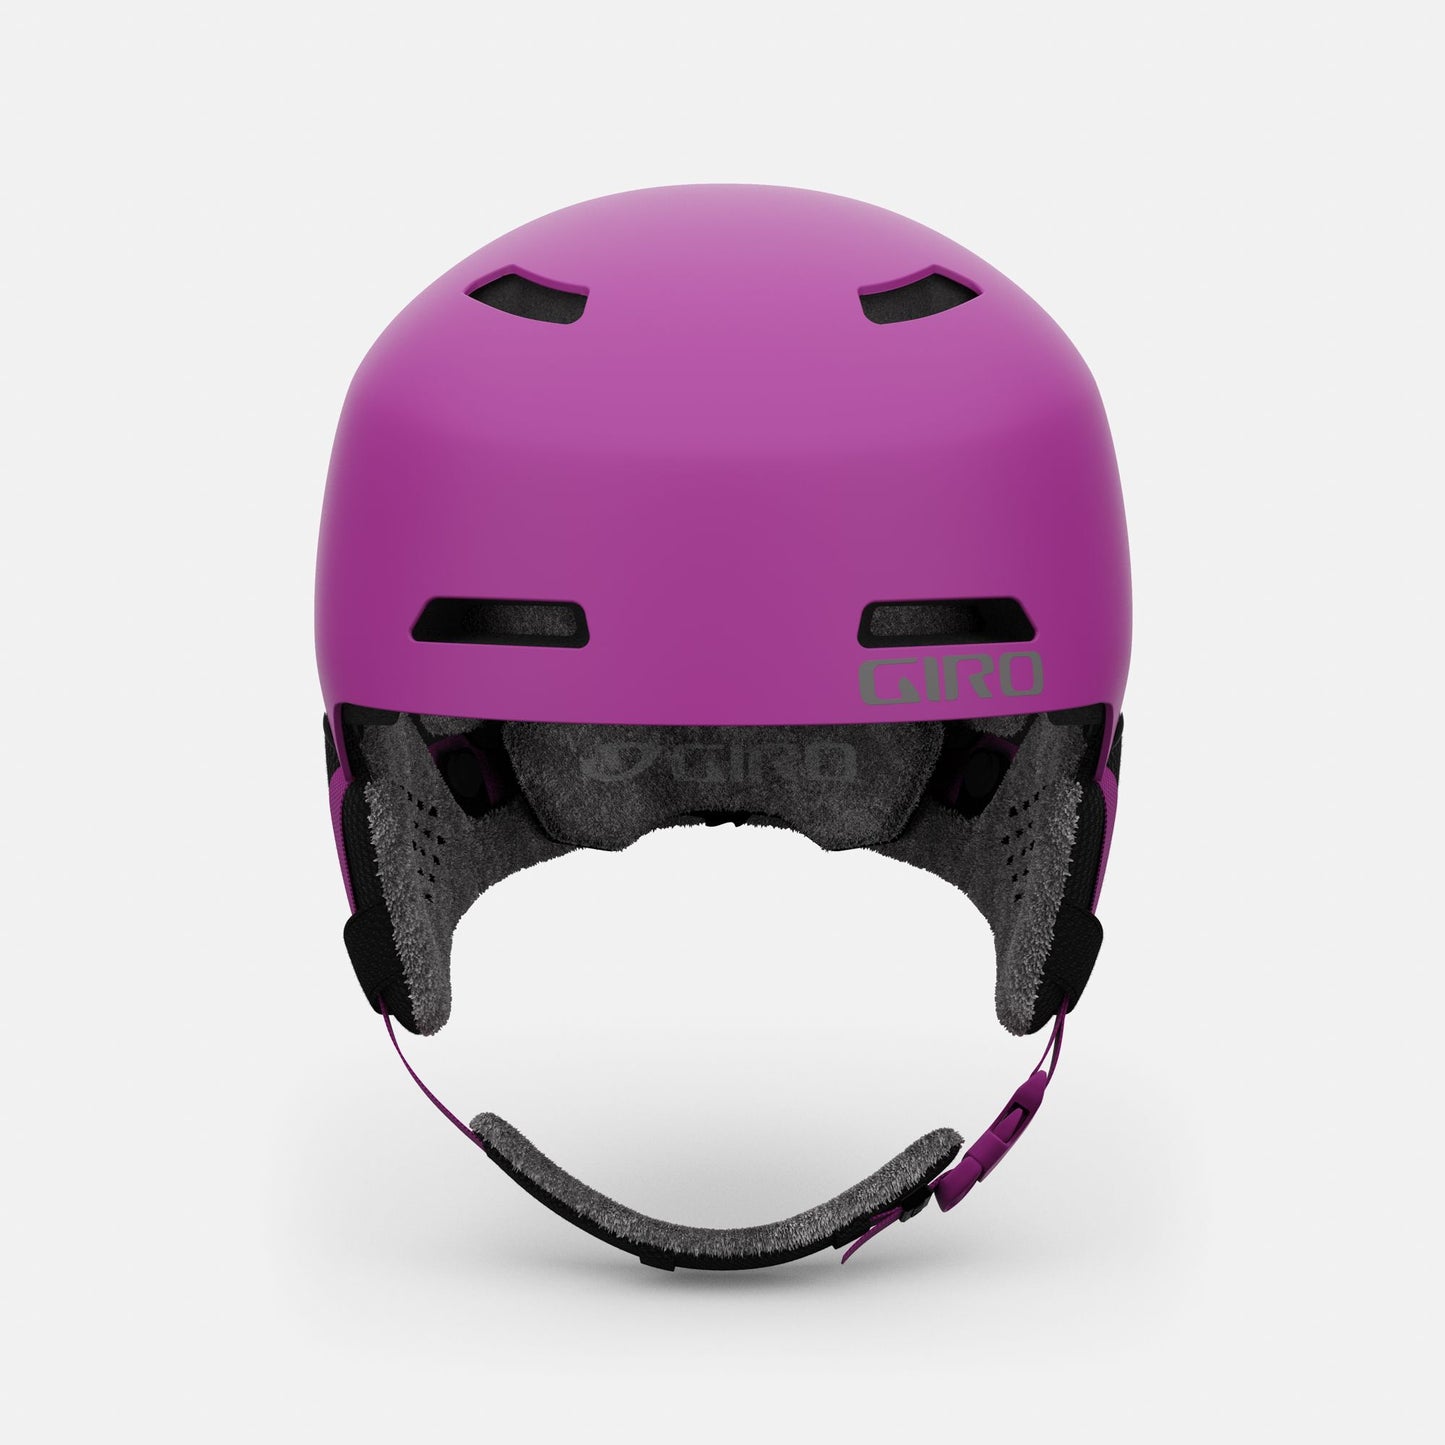 Giro Youth Crue Helmet Matte Berry Snow Helmets